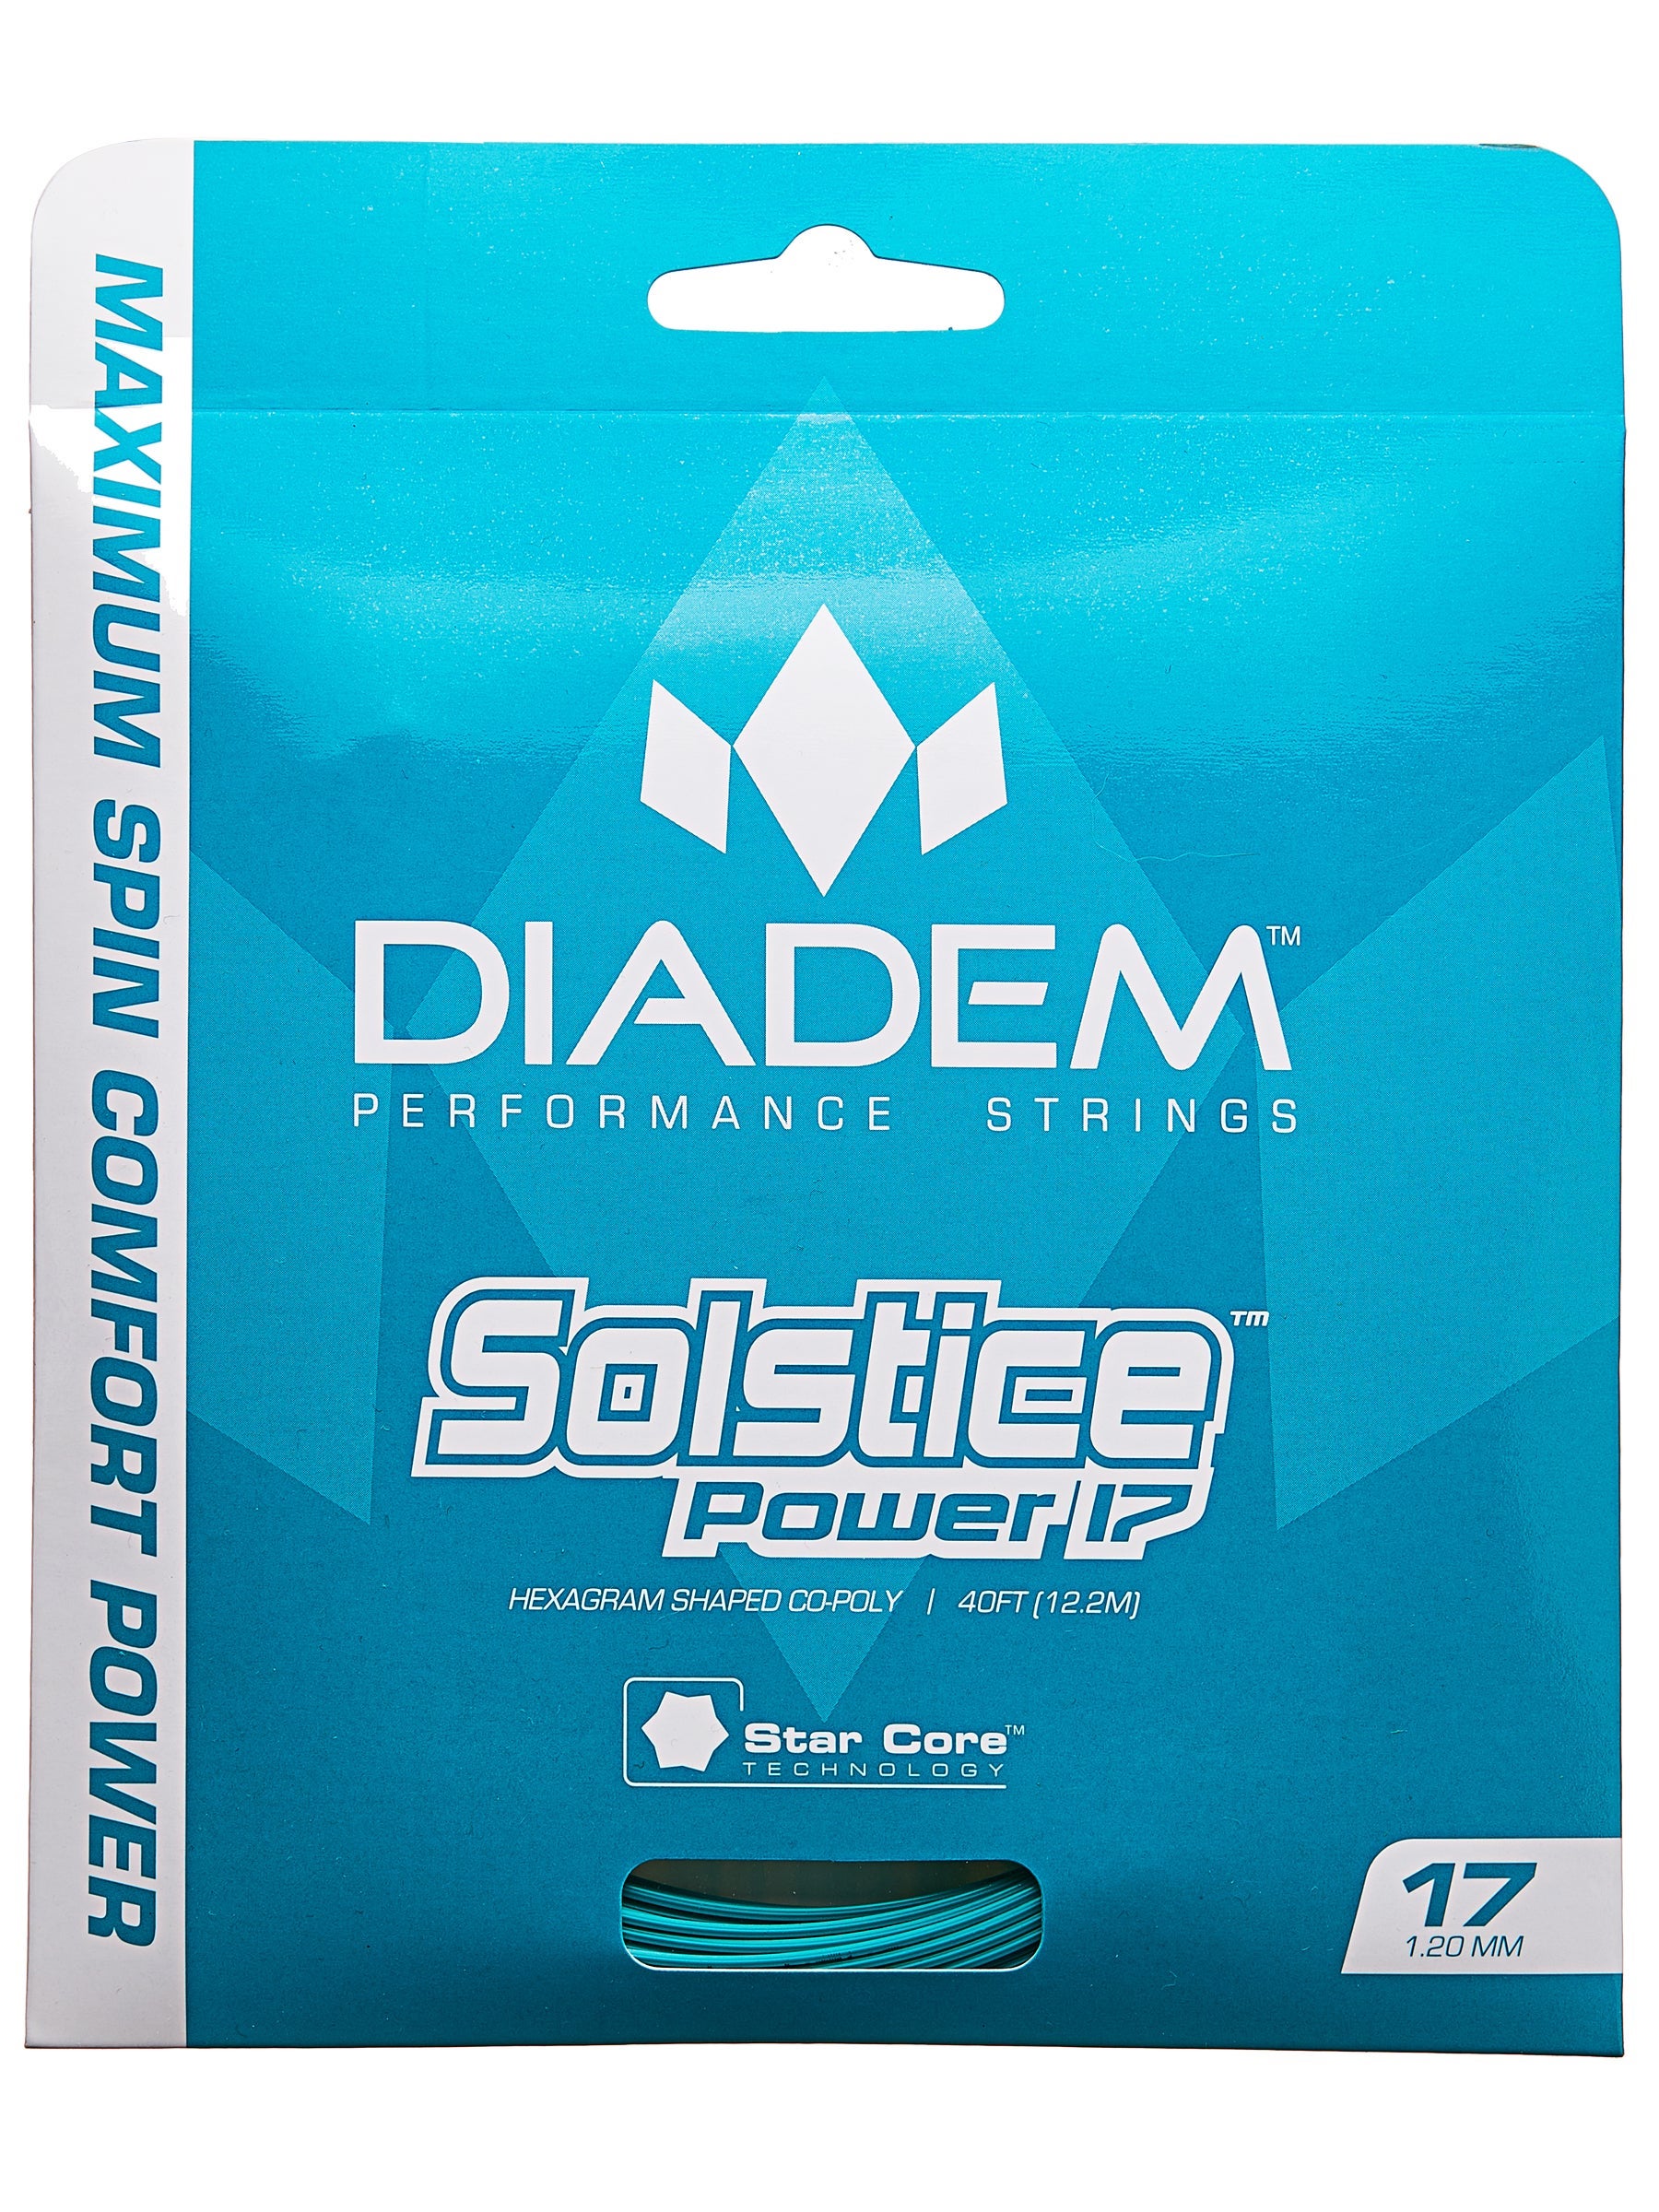 Diadem Solstice Power 17 Tennis String